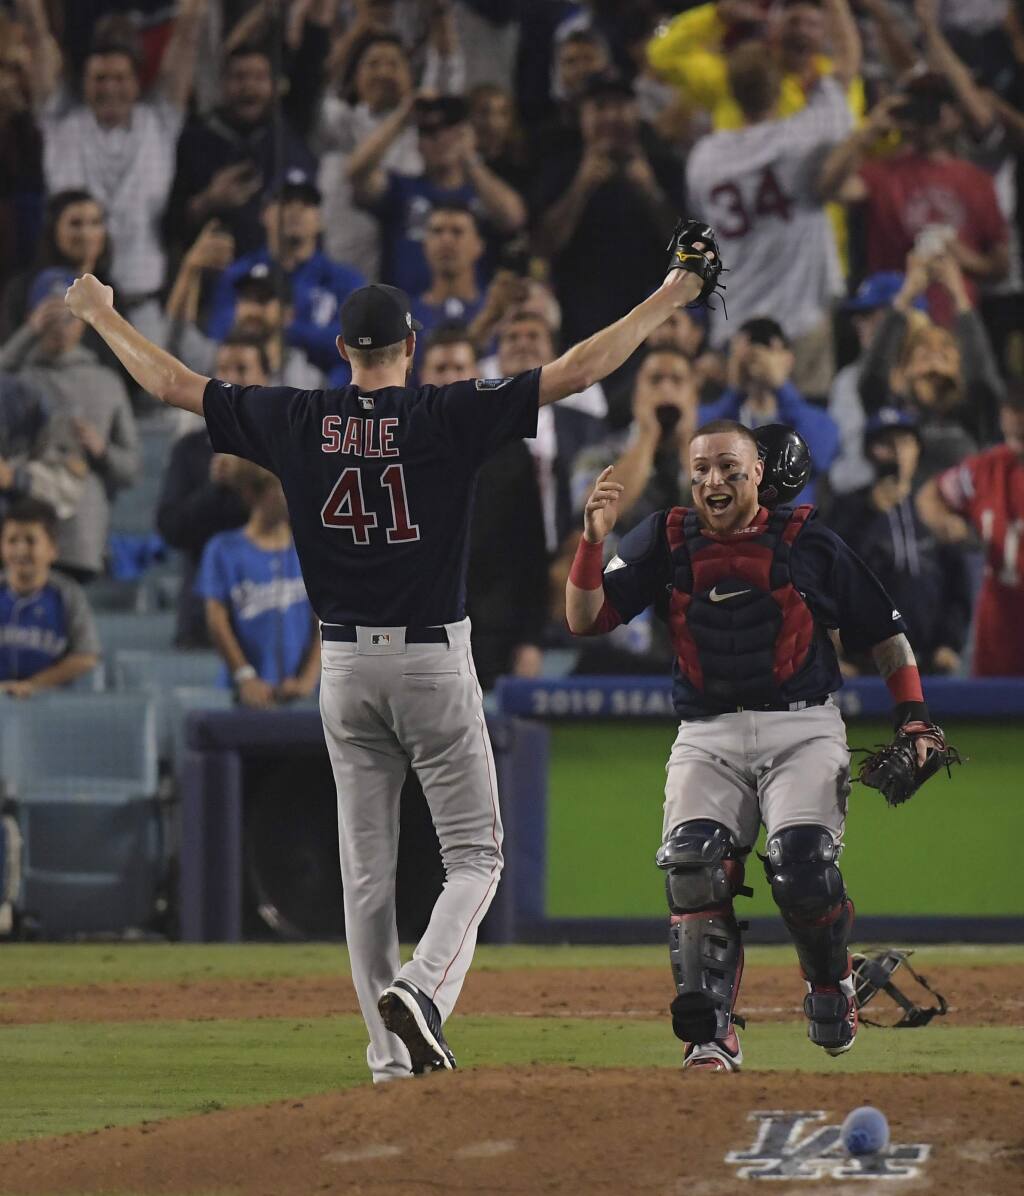 Boston celebrates Red Sox win, remembers marathon bombings - Los